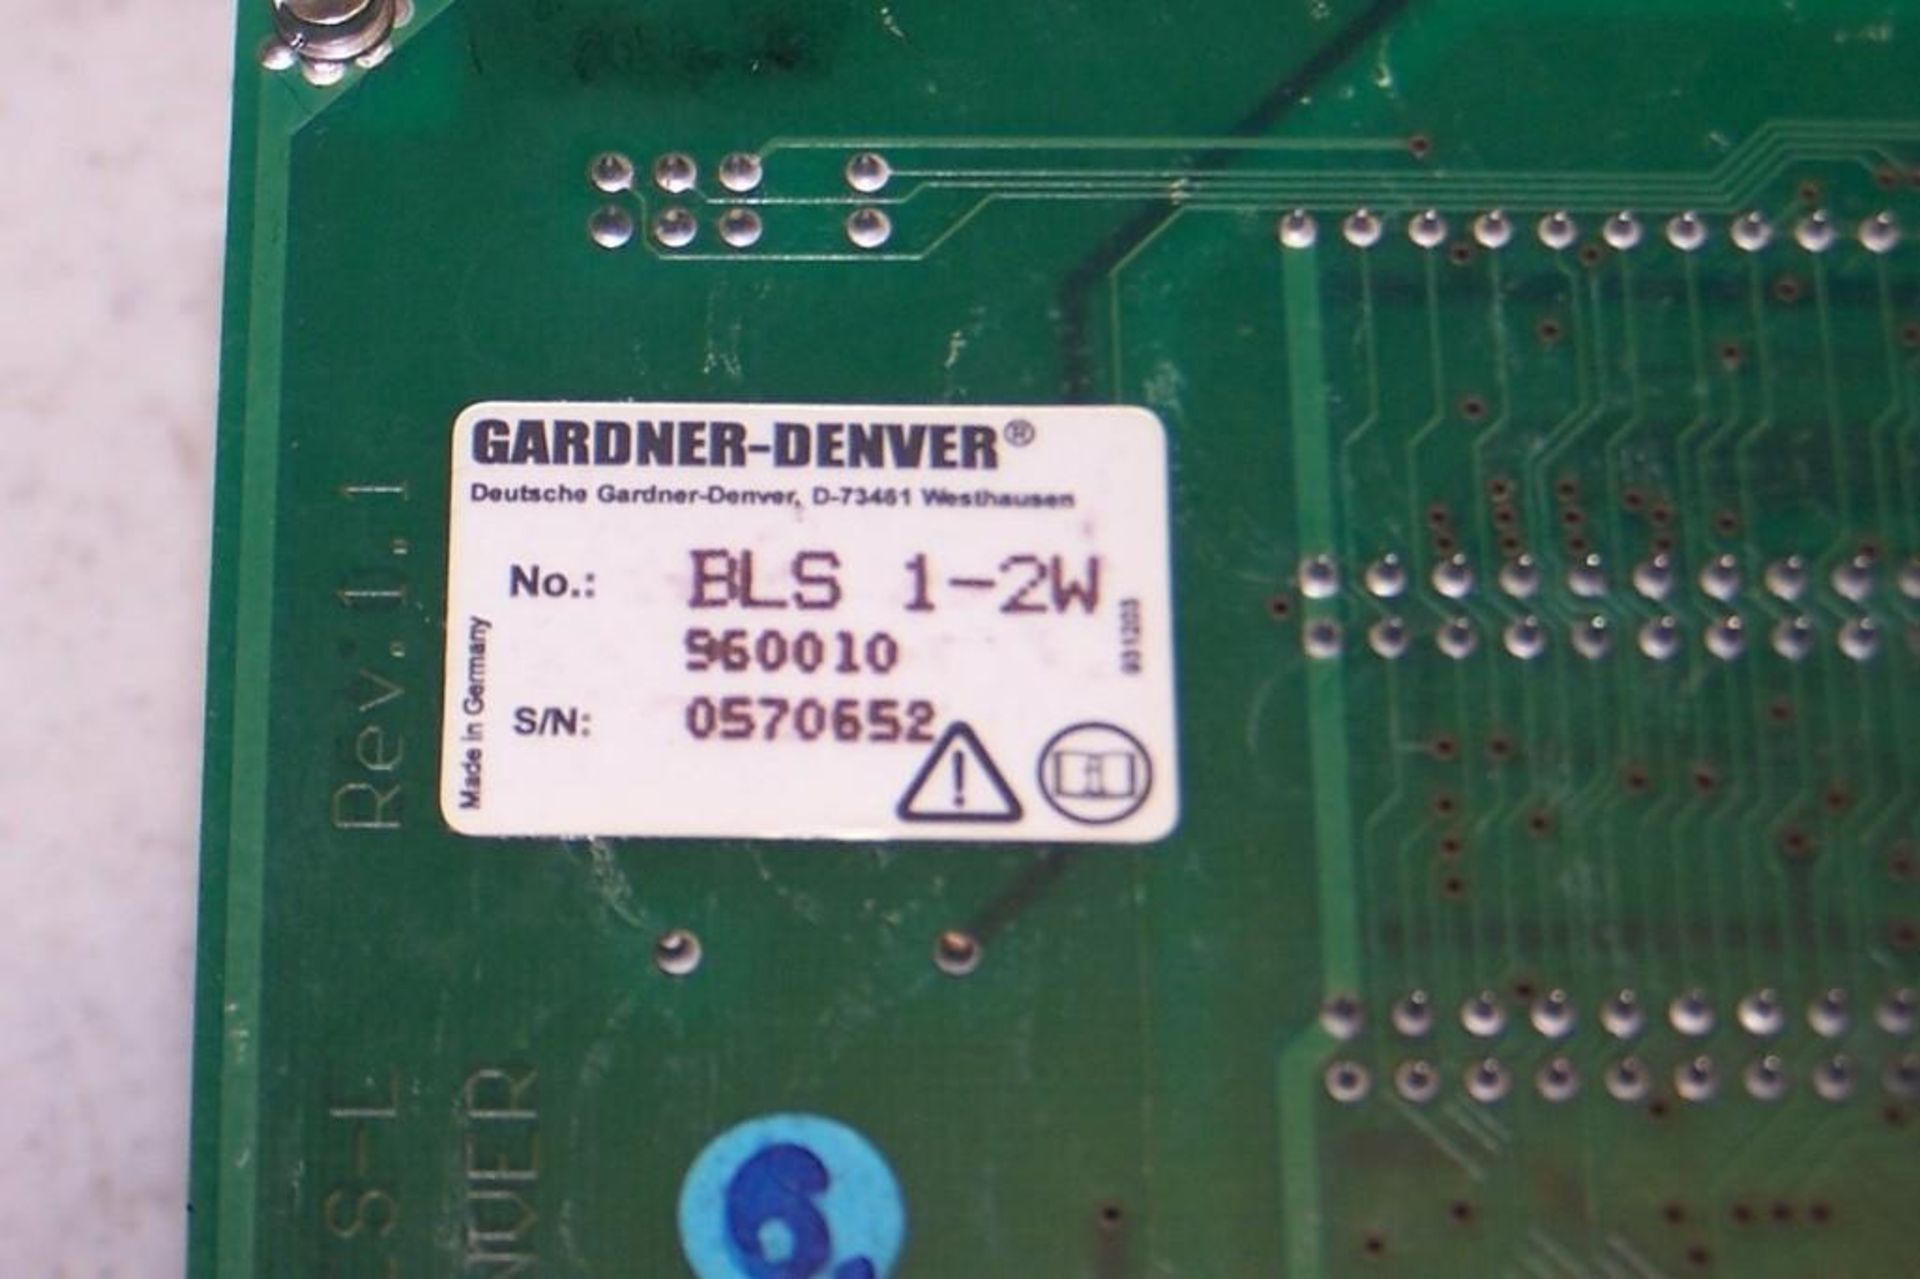 Lot of (13) DGD Gardner Denver Servo Controls, # BLS1-2W, P/N 960010 - Image 5 of 5